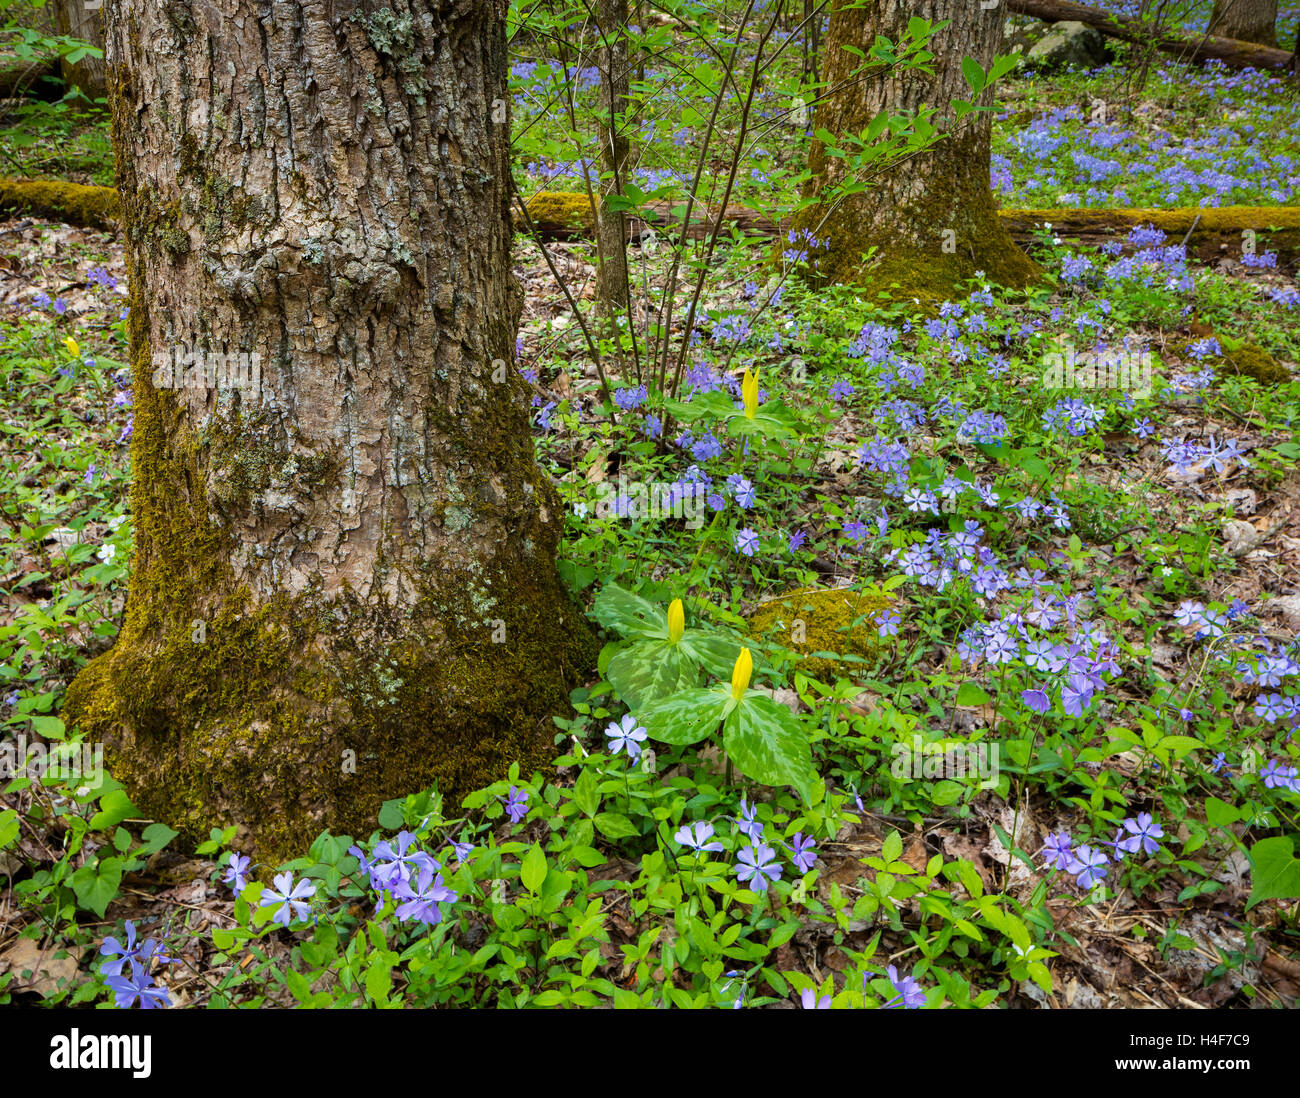 Great Smoky Mountains National Park, Tennessee: Wild blue phlox (Phlox divaricata) and yellow trillium (Trillium luteum) bloomin Stock Photo